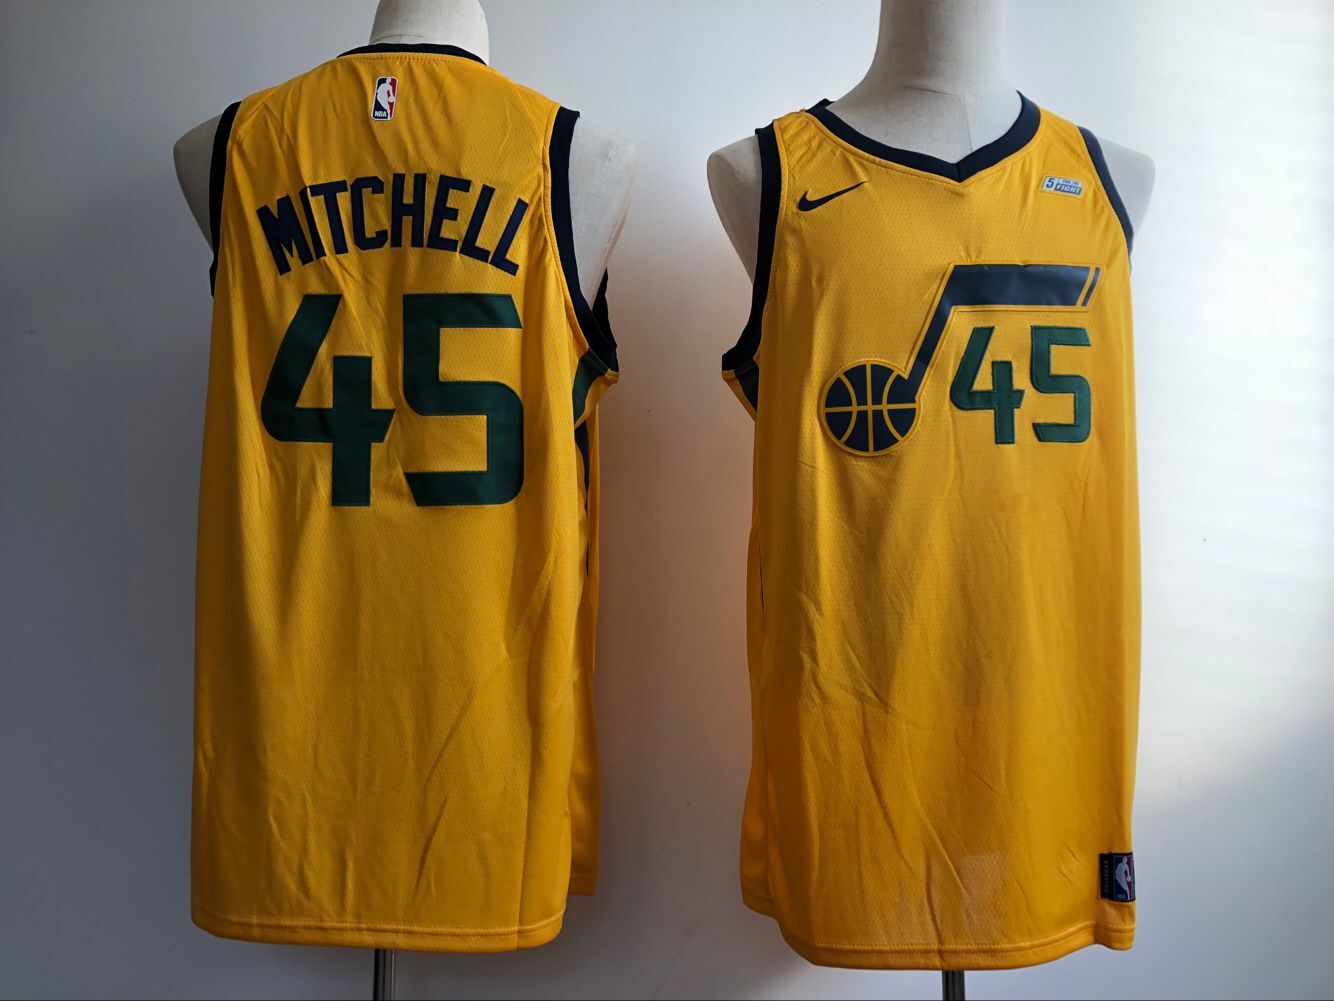 2018 Men Utah Jazz #45 Mitchell yellow Nike NBA Jerseys->->NBA Jersey